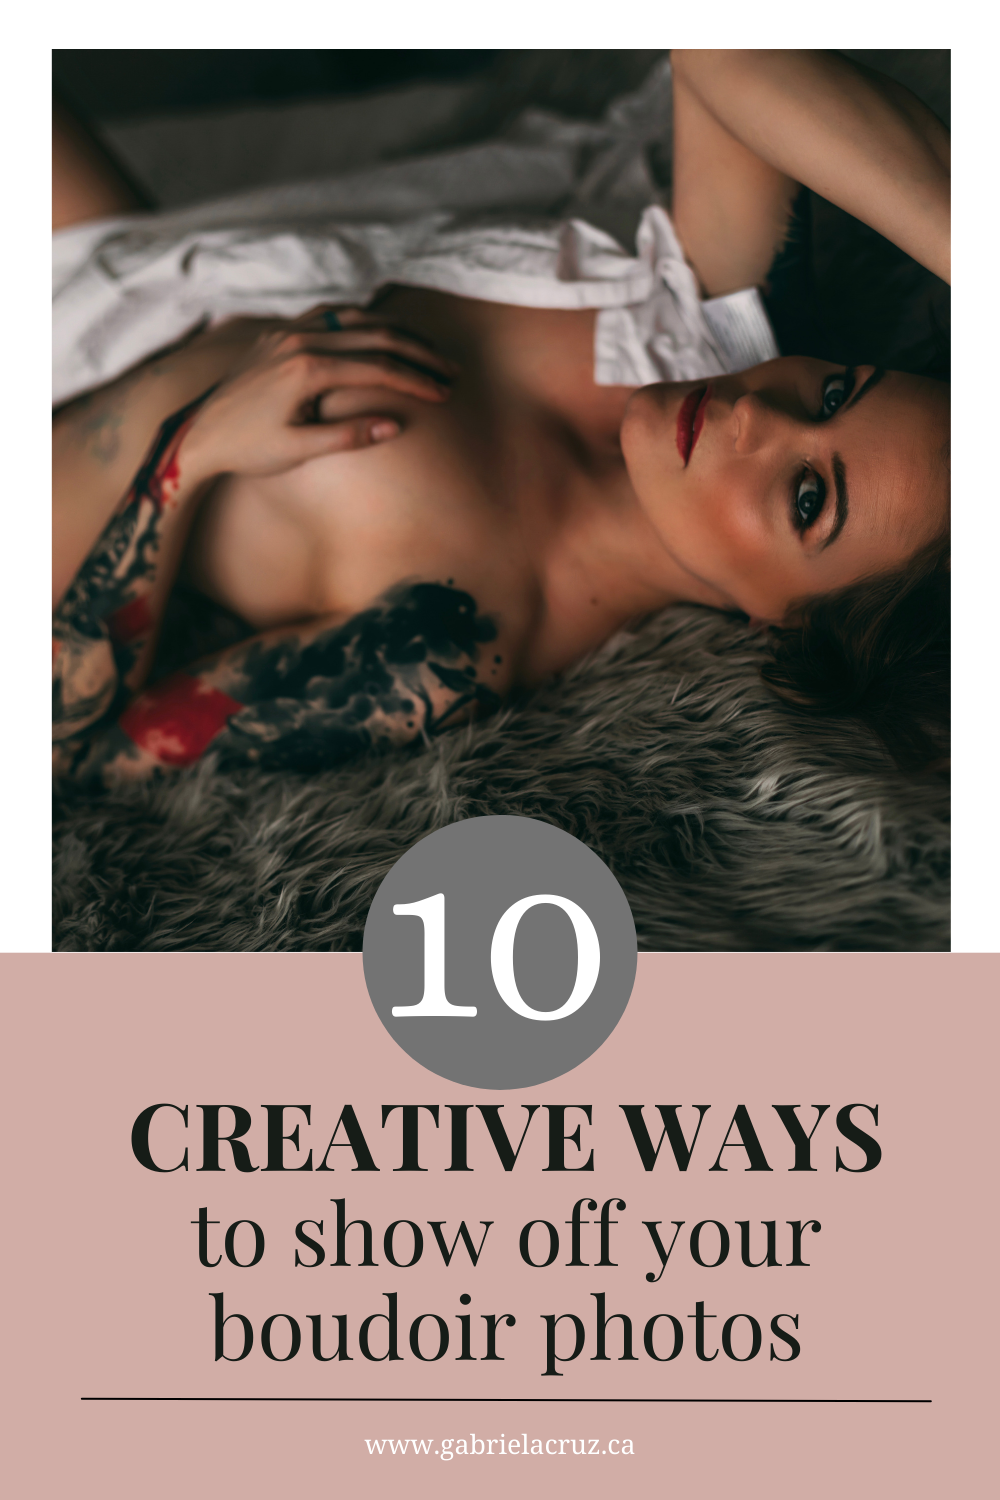 Gabriela Cruz Empowerment Boudoir Photography's top 10 ways to show off your boudoir photoshoot images